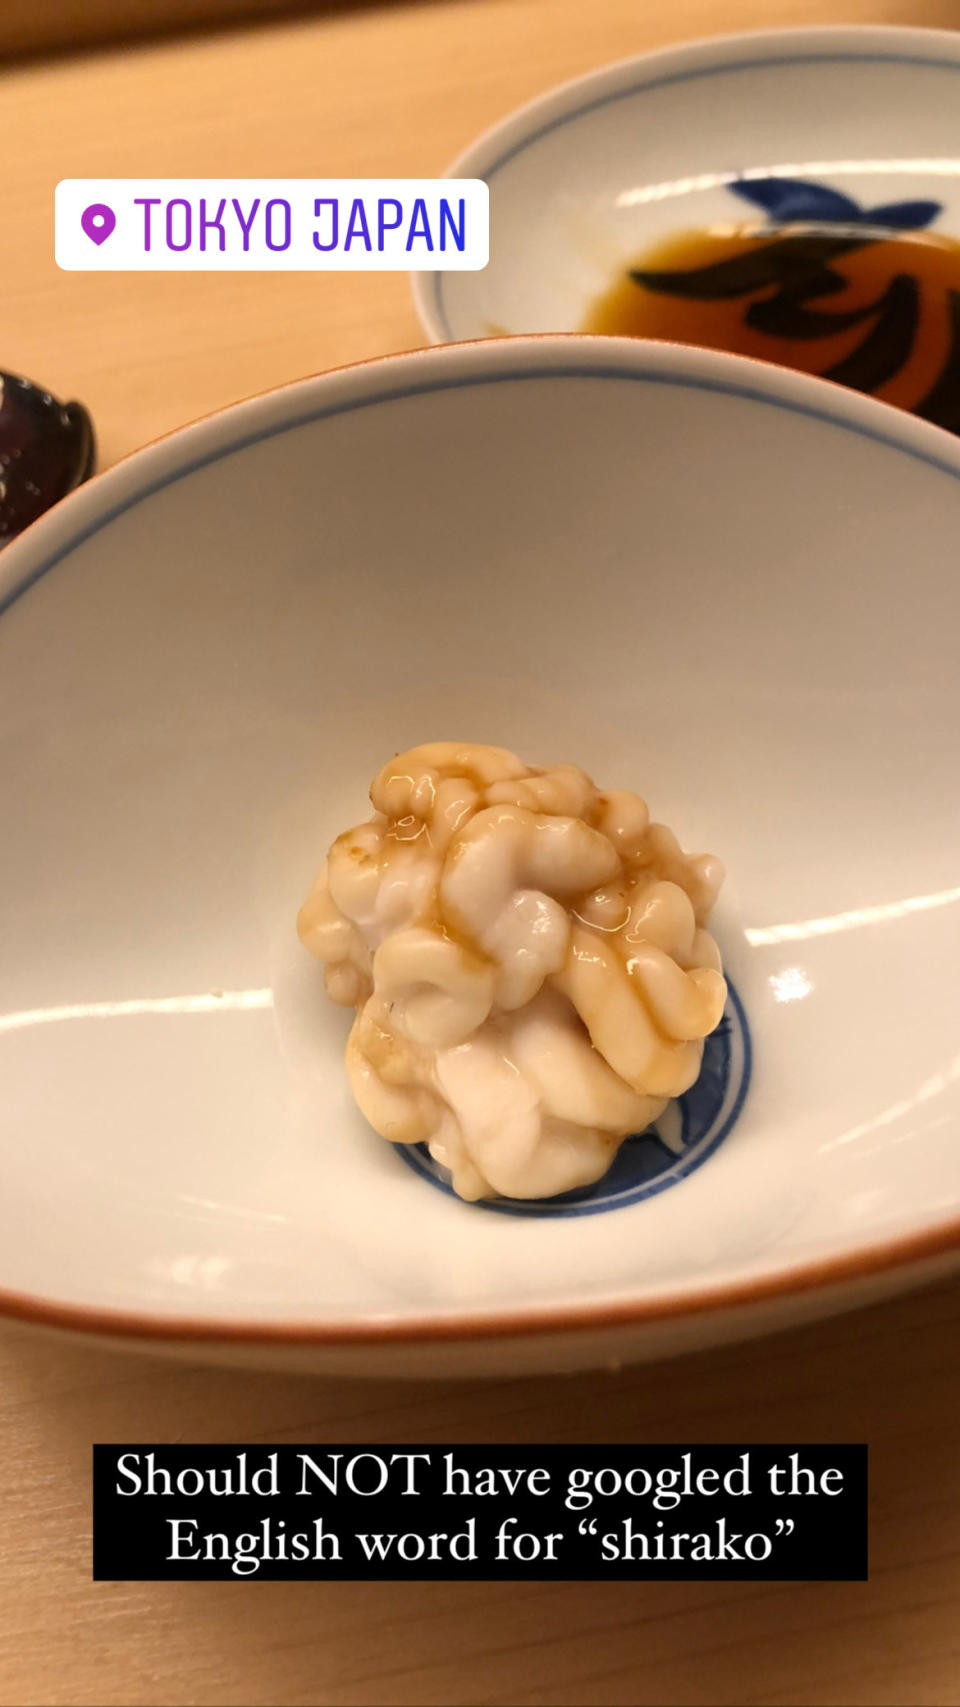 Shirako, or cod sperm sack, at a restaurant in Tokyo